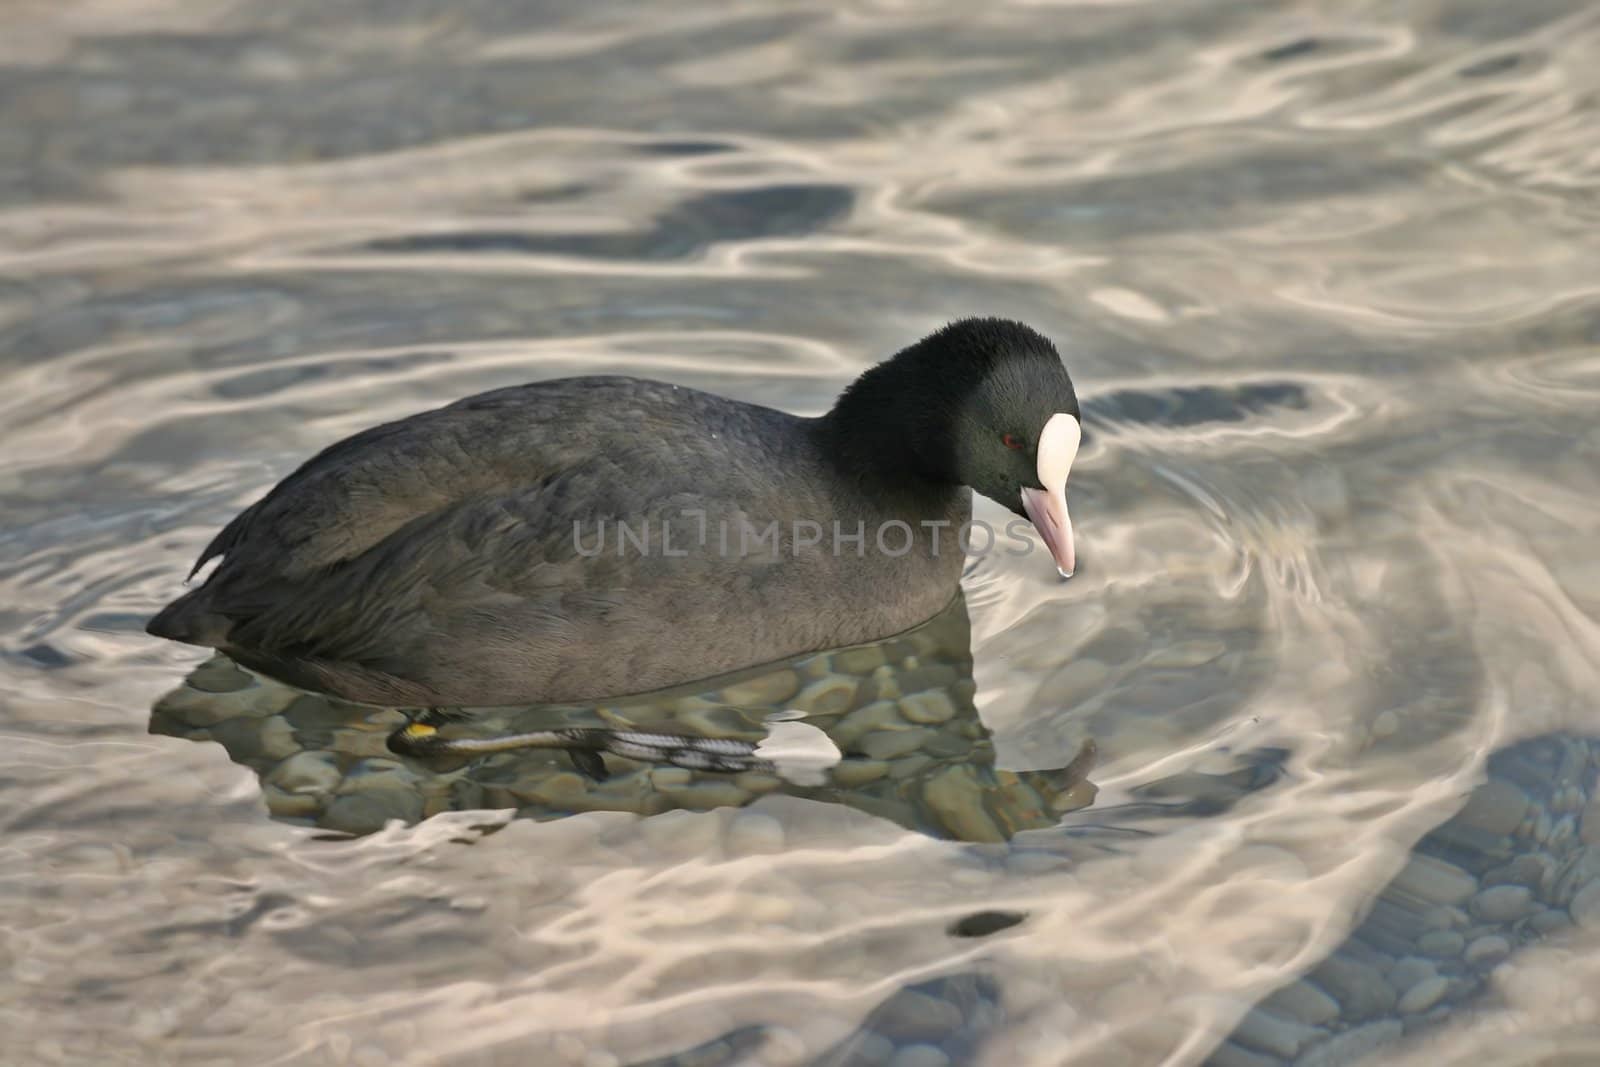 Strange duck swimming in water